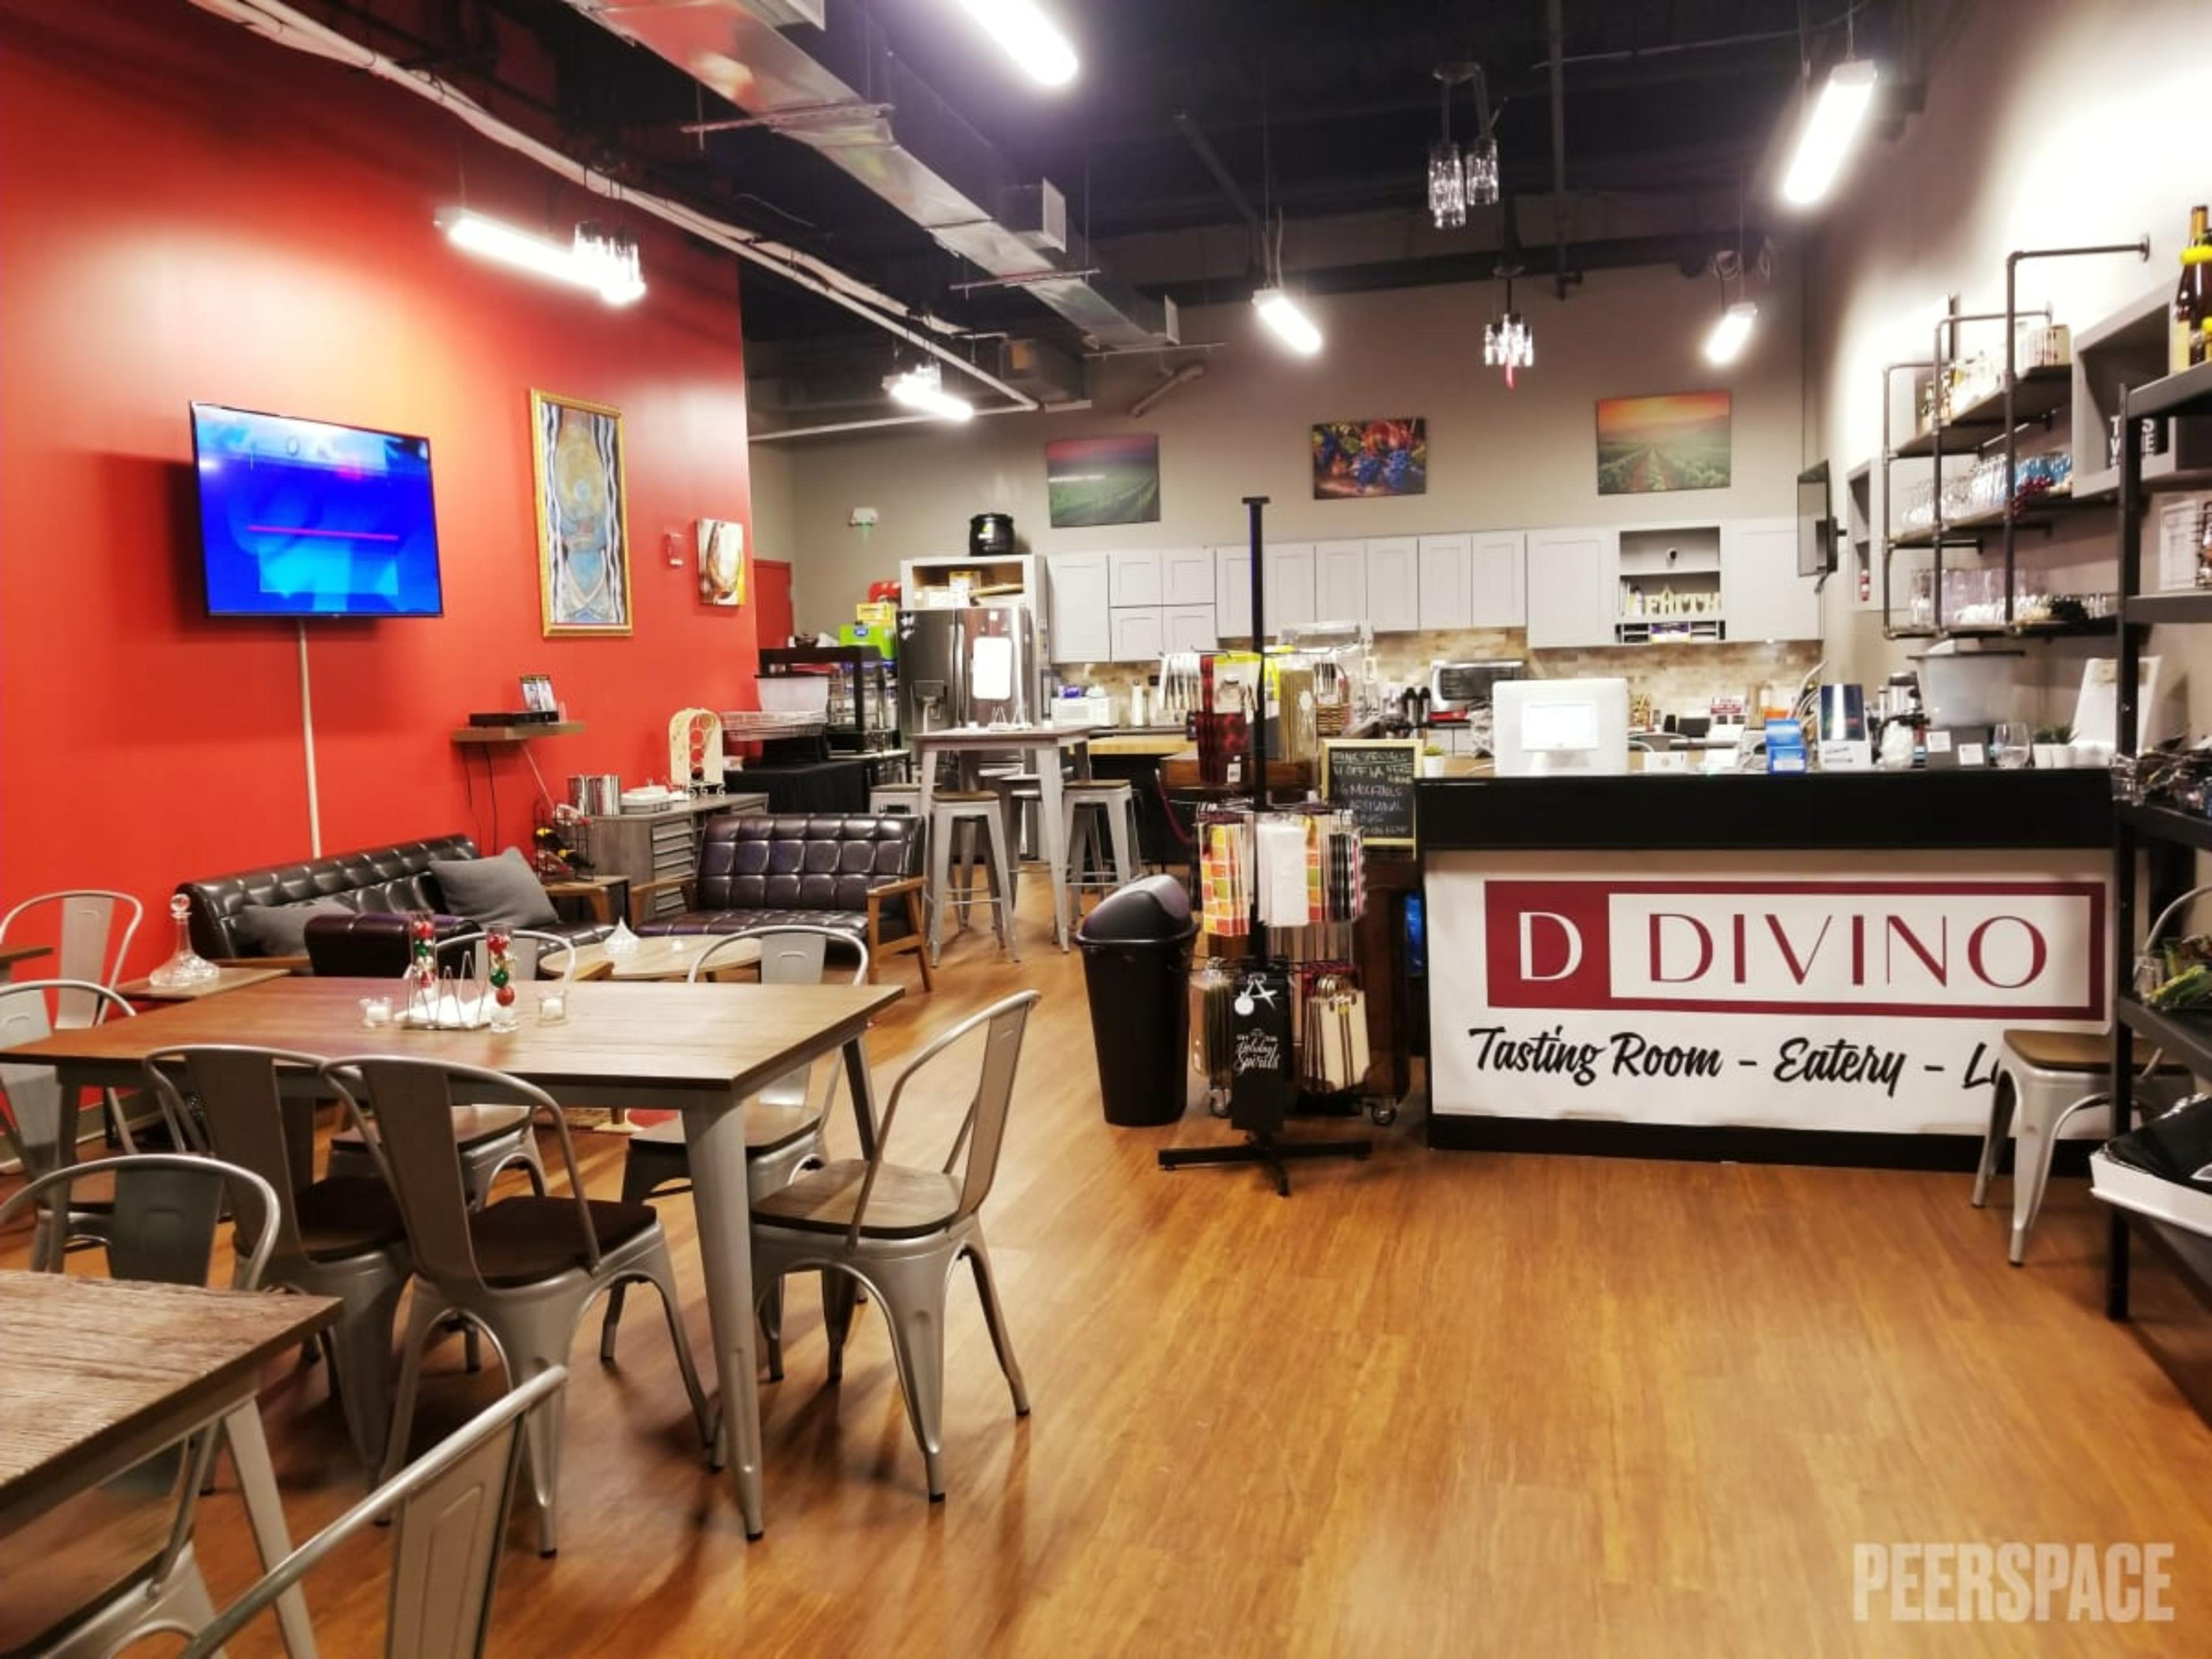 Divino Tasting Room, Eatery & Lounge